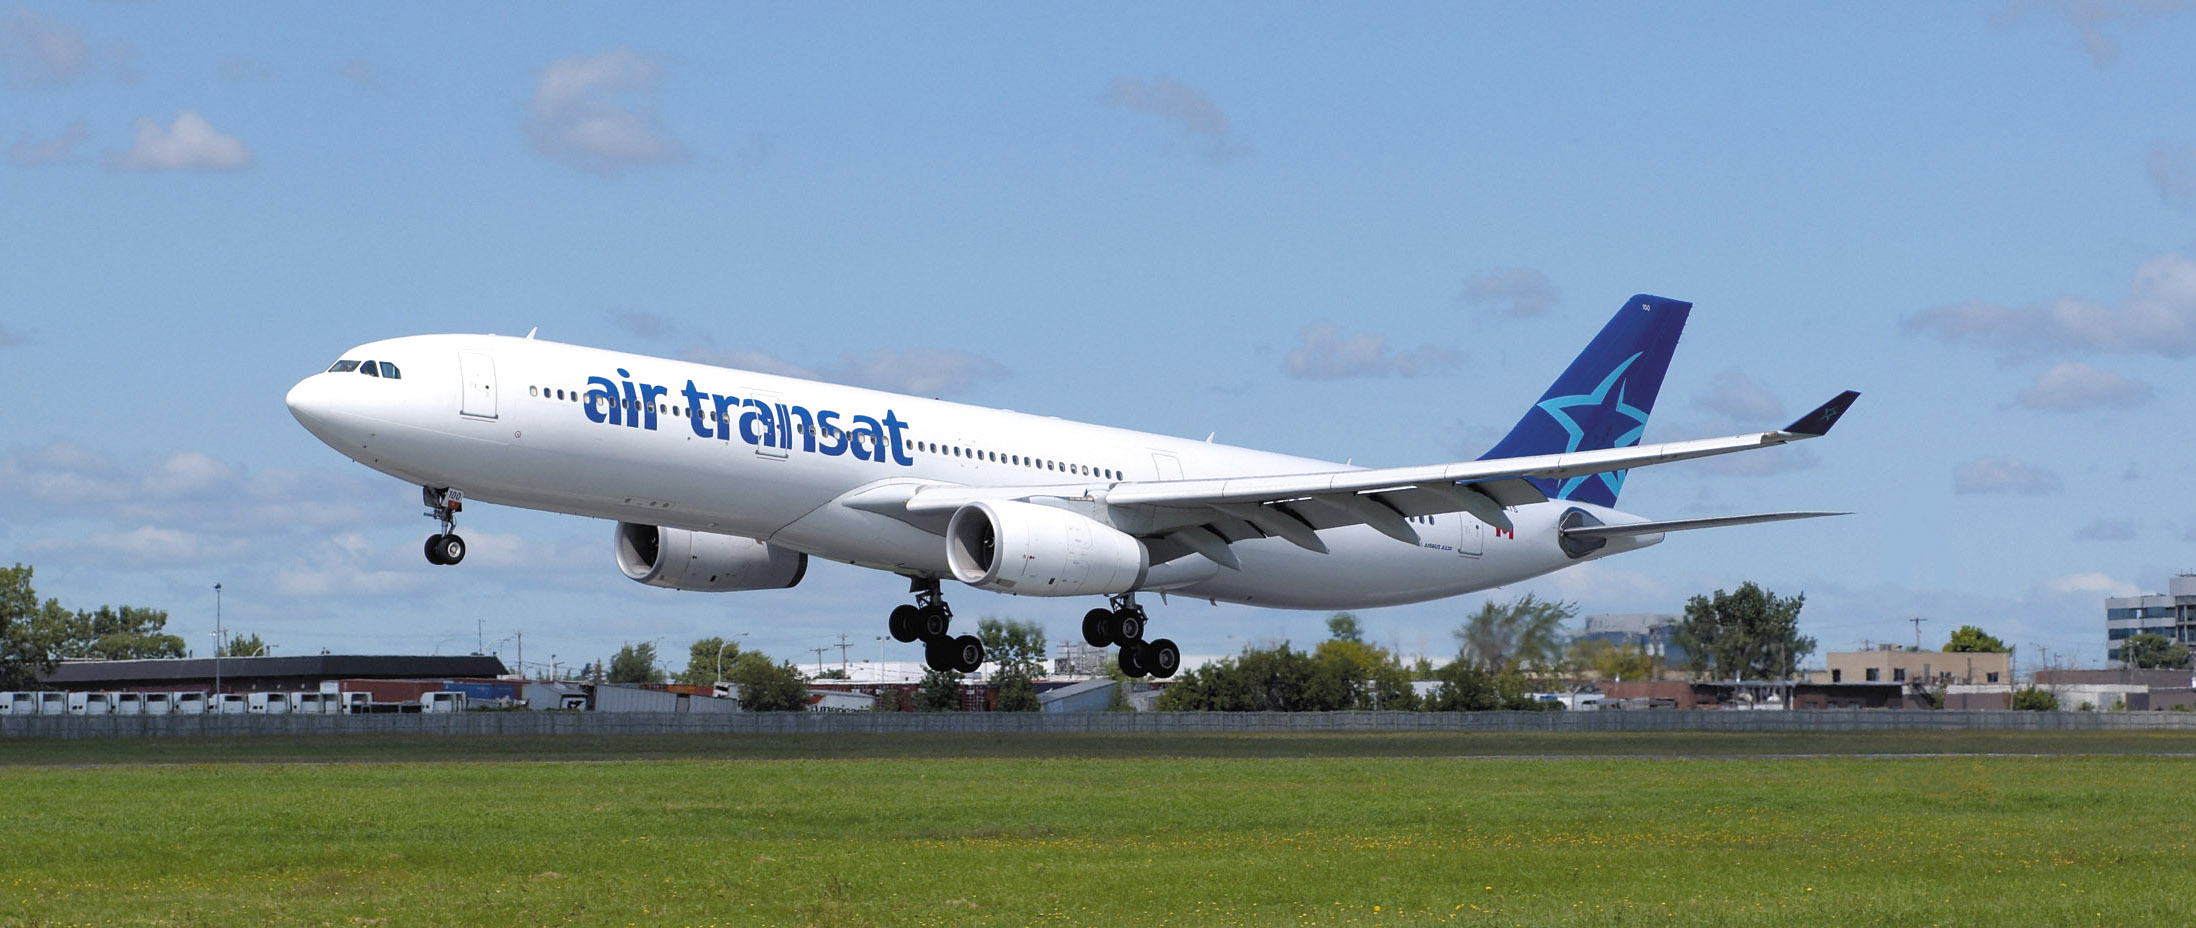 News dalle compagnie aeree: Air Transat, easyJet, Emirates